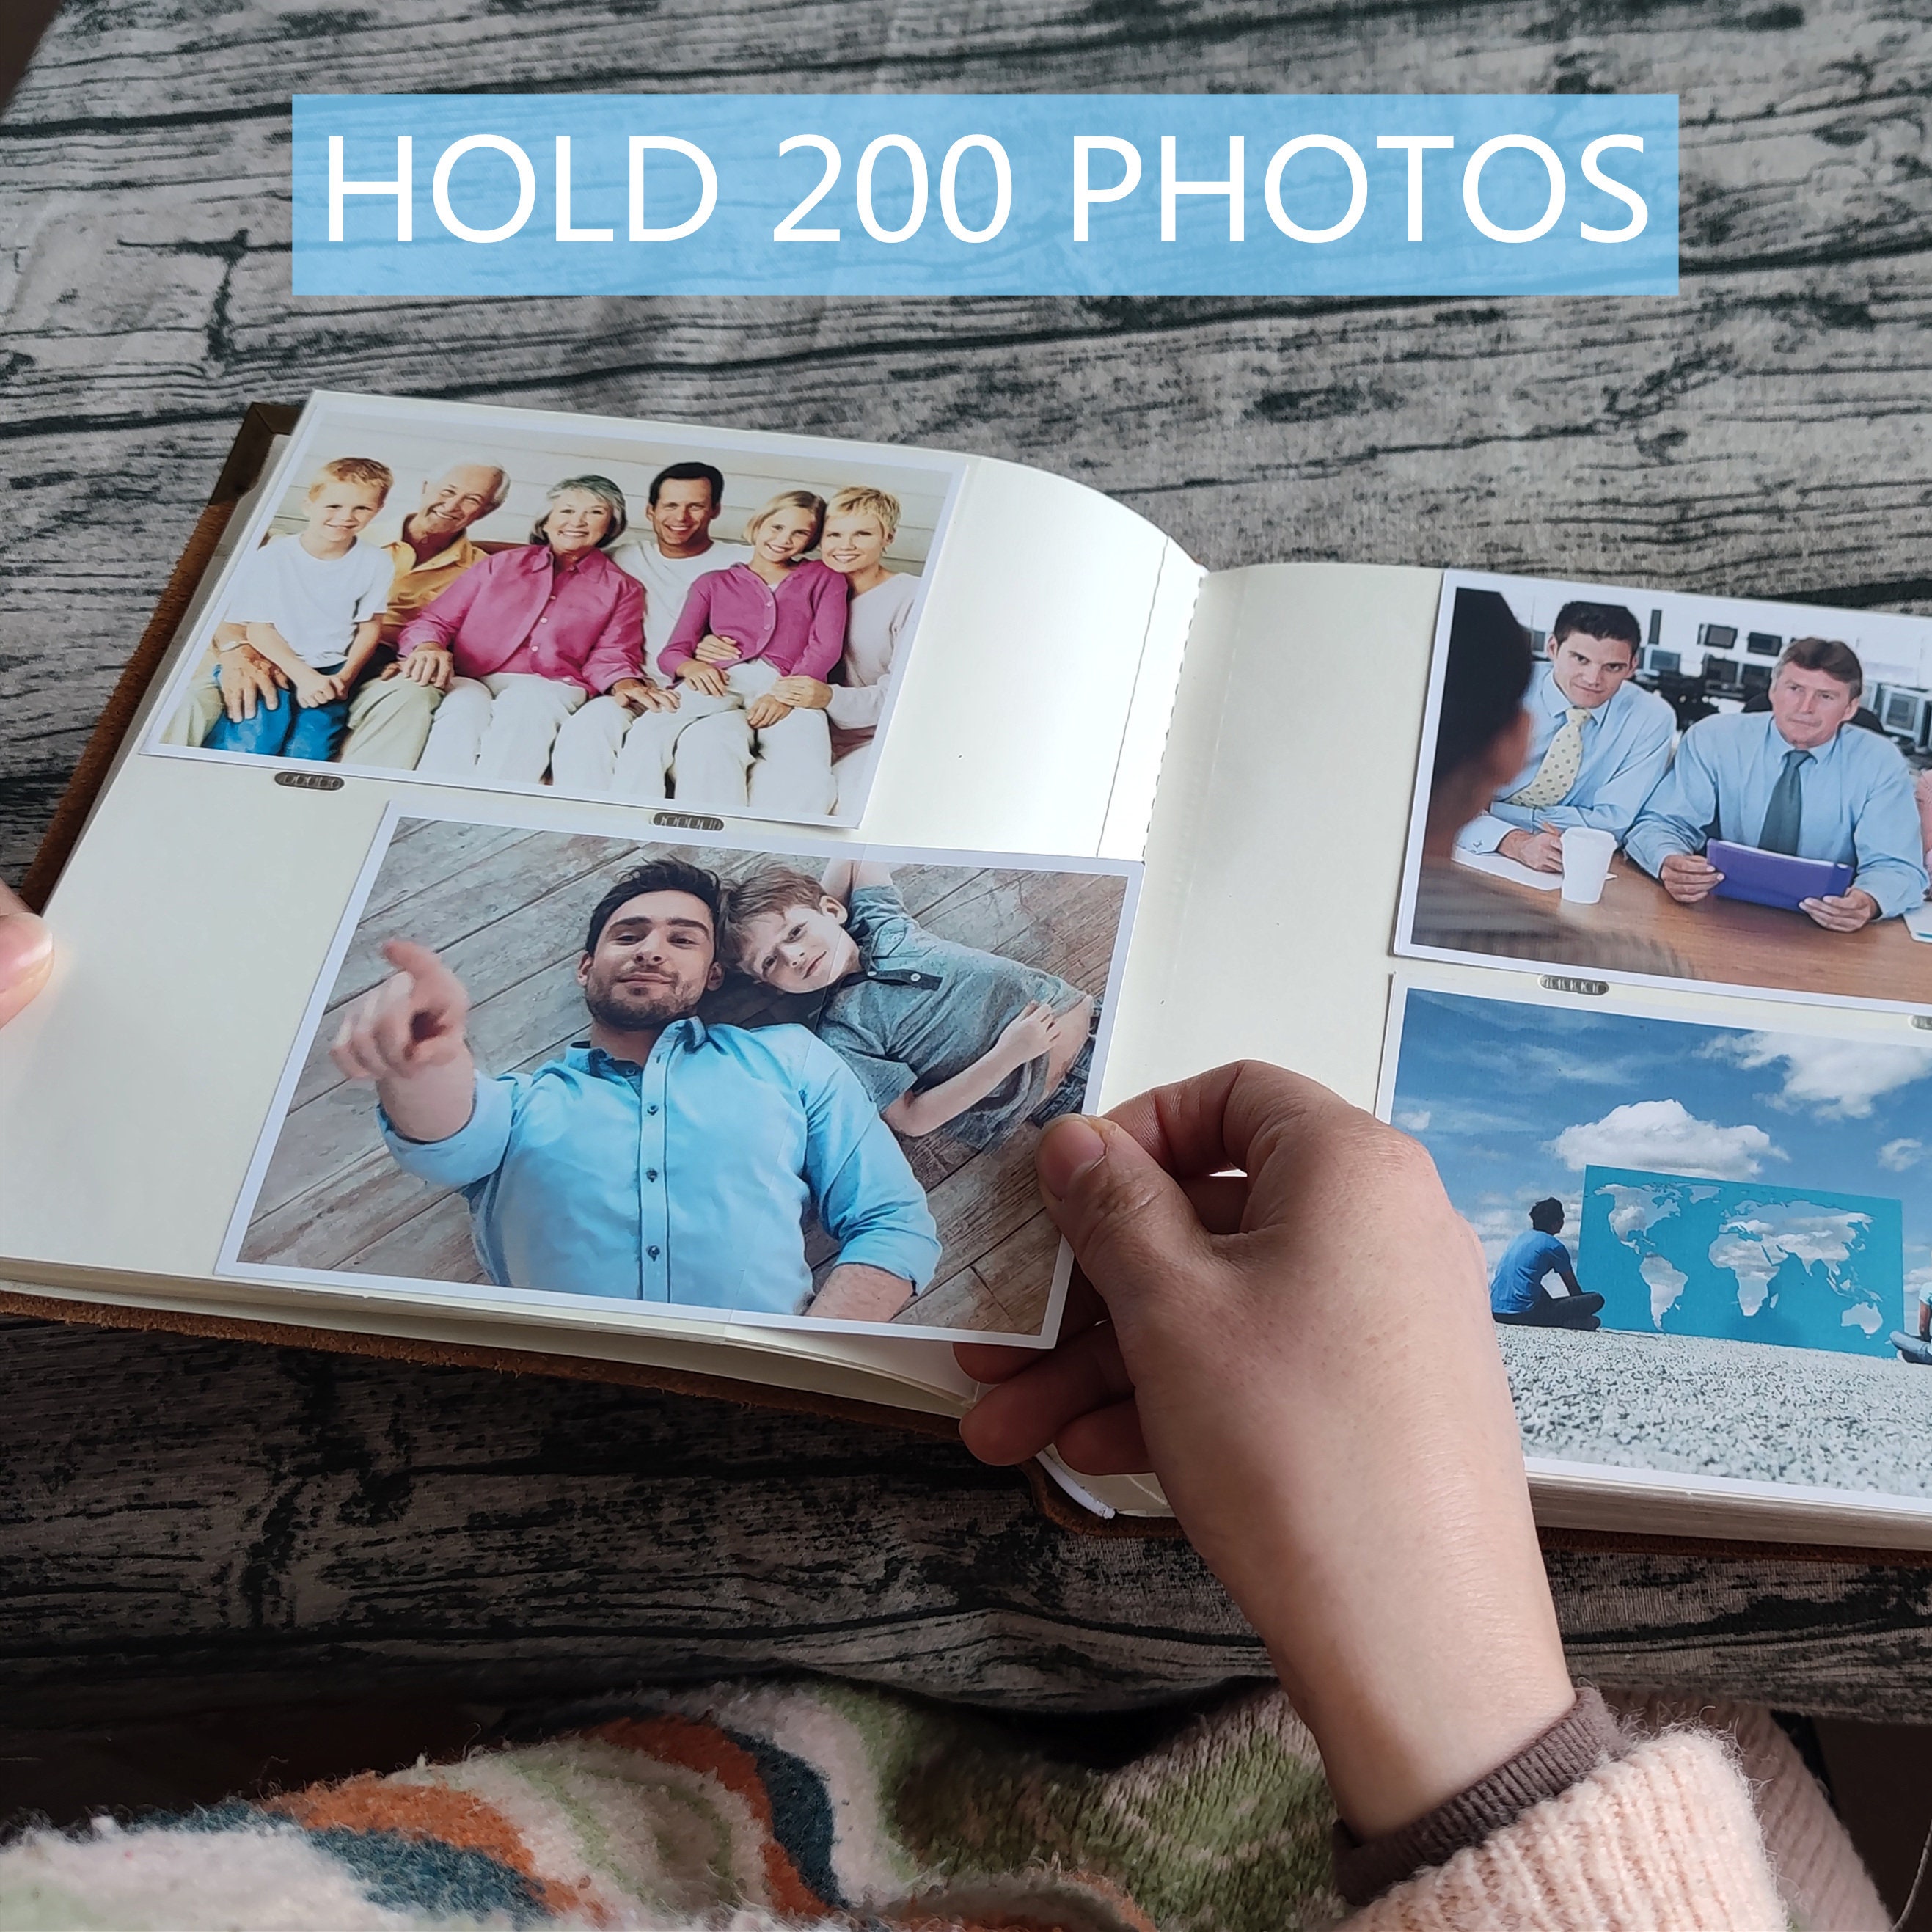 HANTAJANSS Our Adventure Book, Photo Album Scrapbook, Handmade DIY Photo  Book, Family Scrapbook, Wedding Memory Book